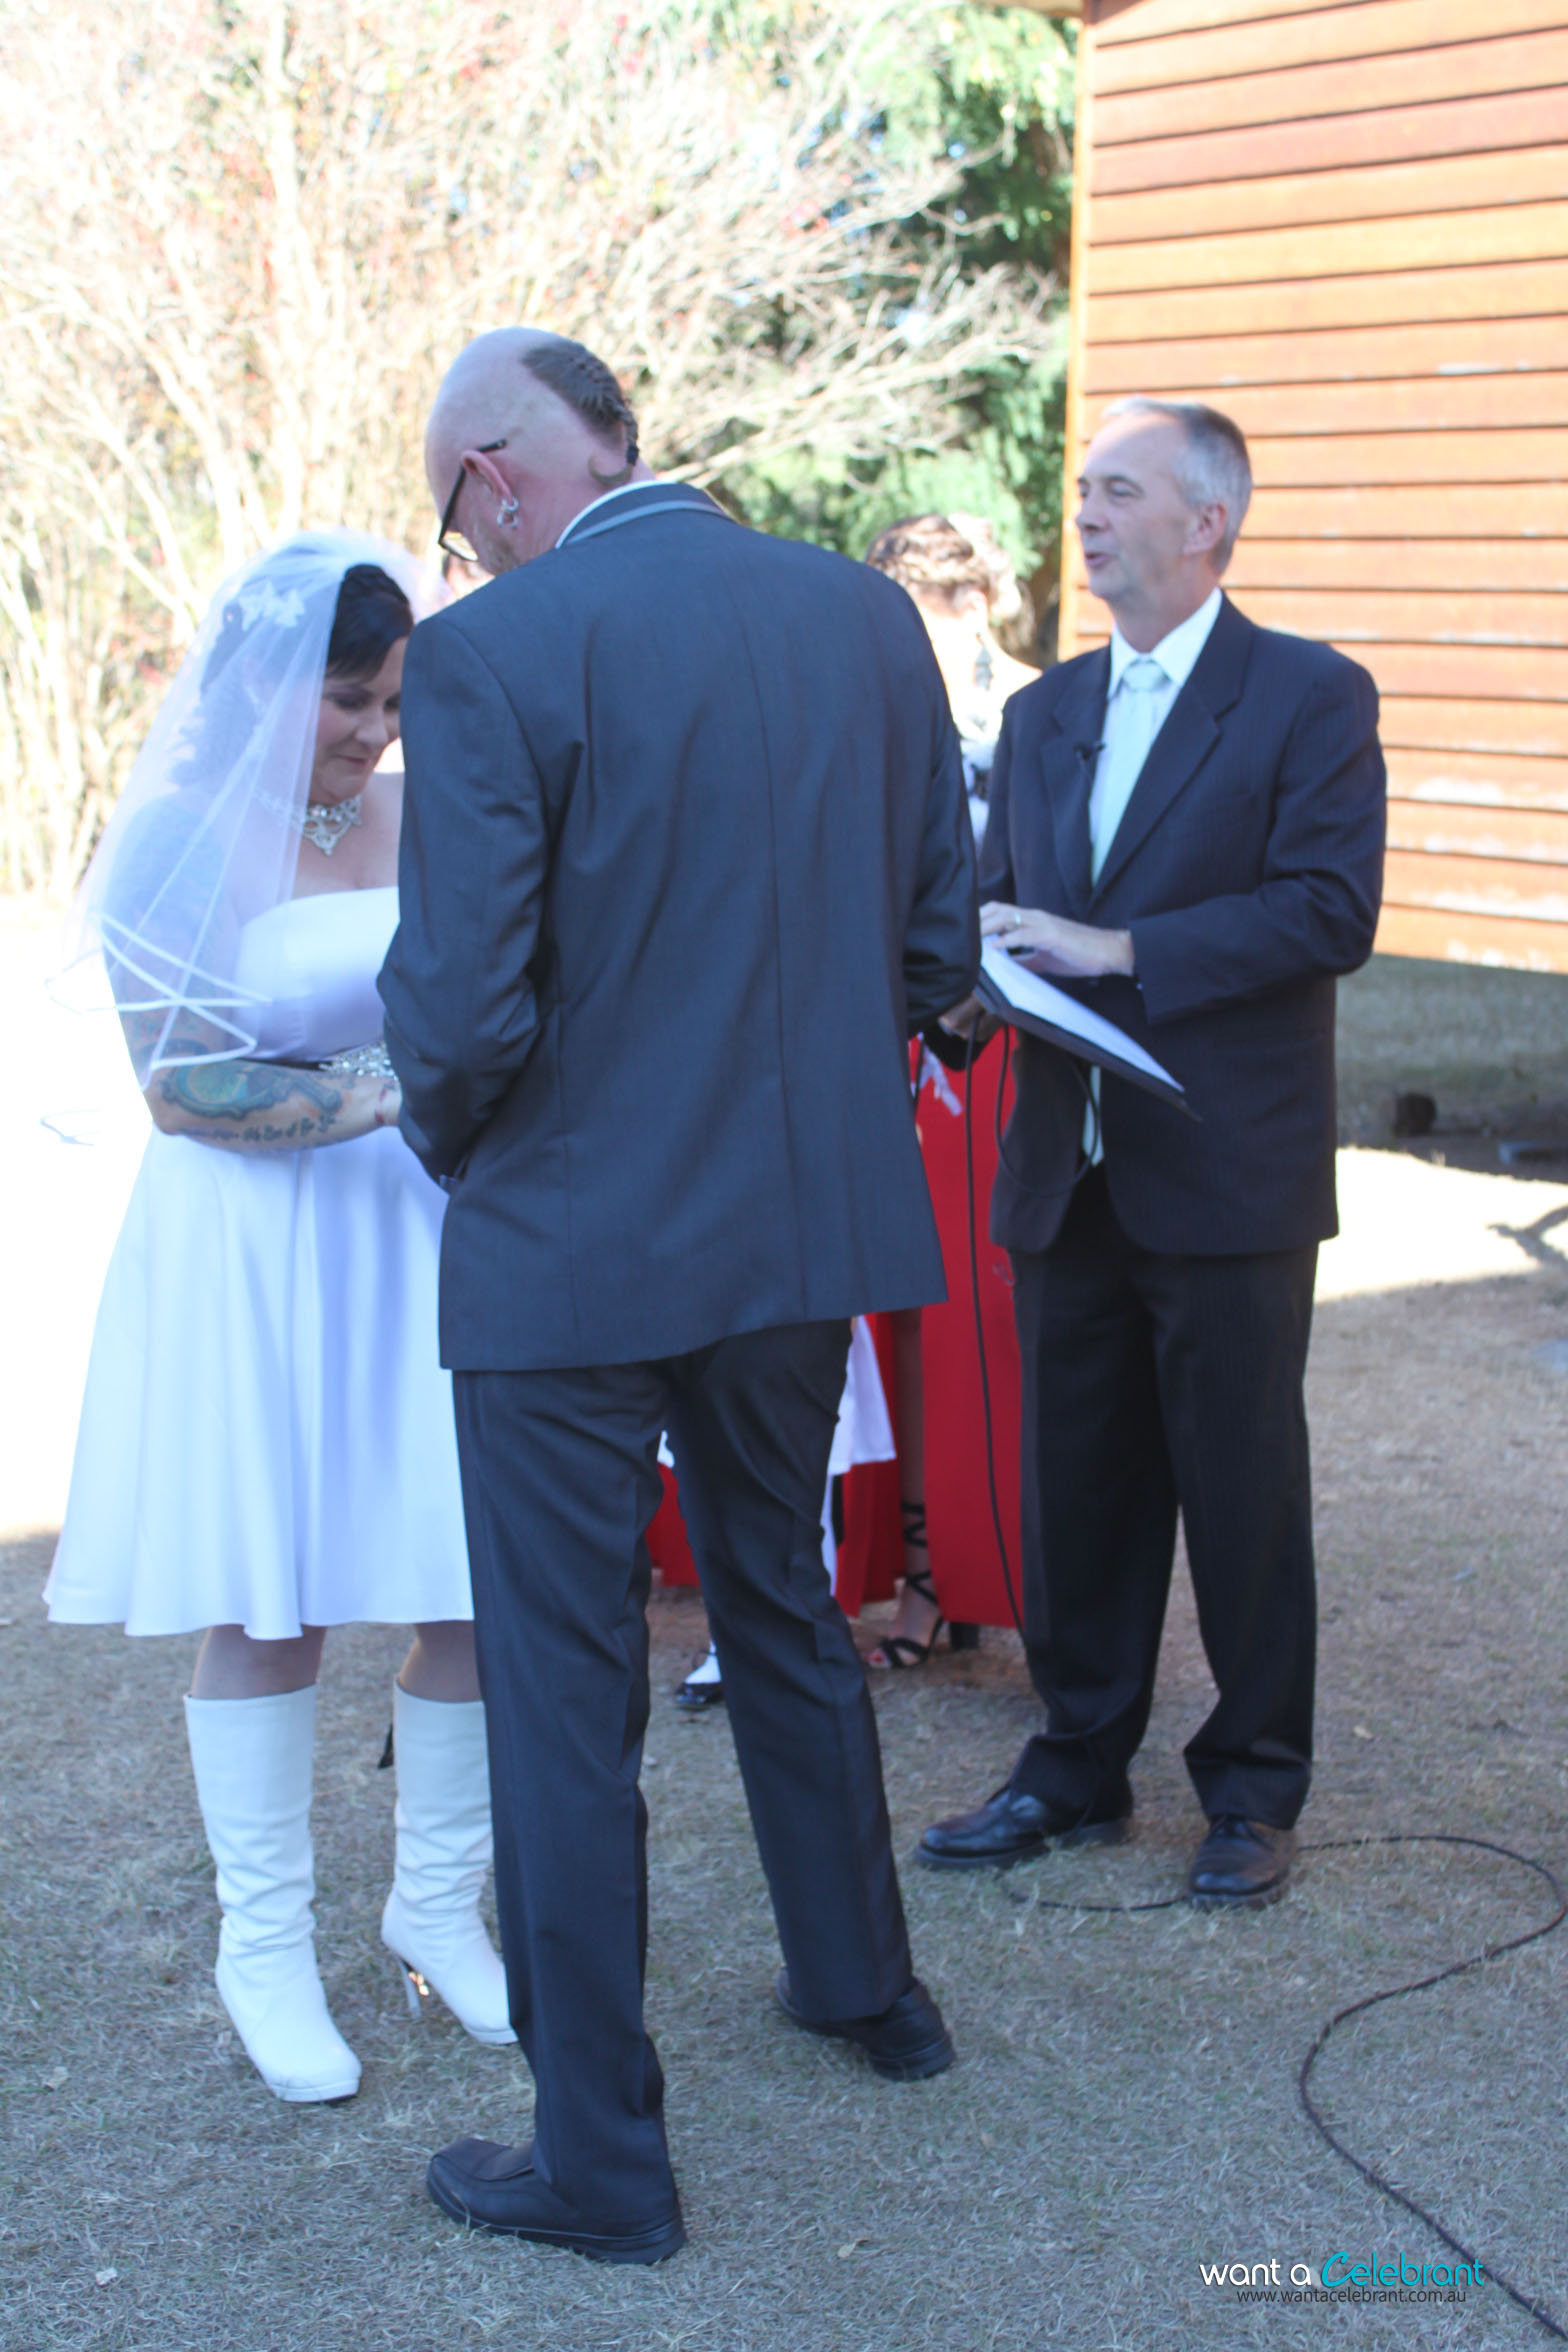 Wedding ceremony with Fijian elements